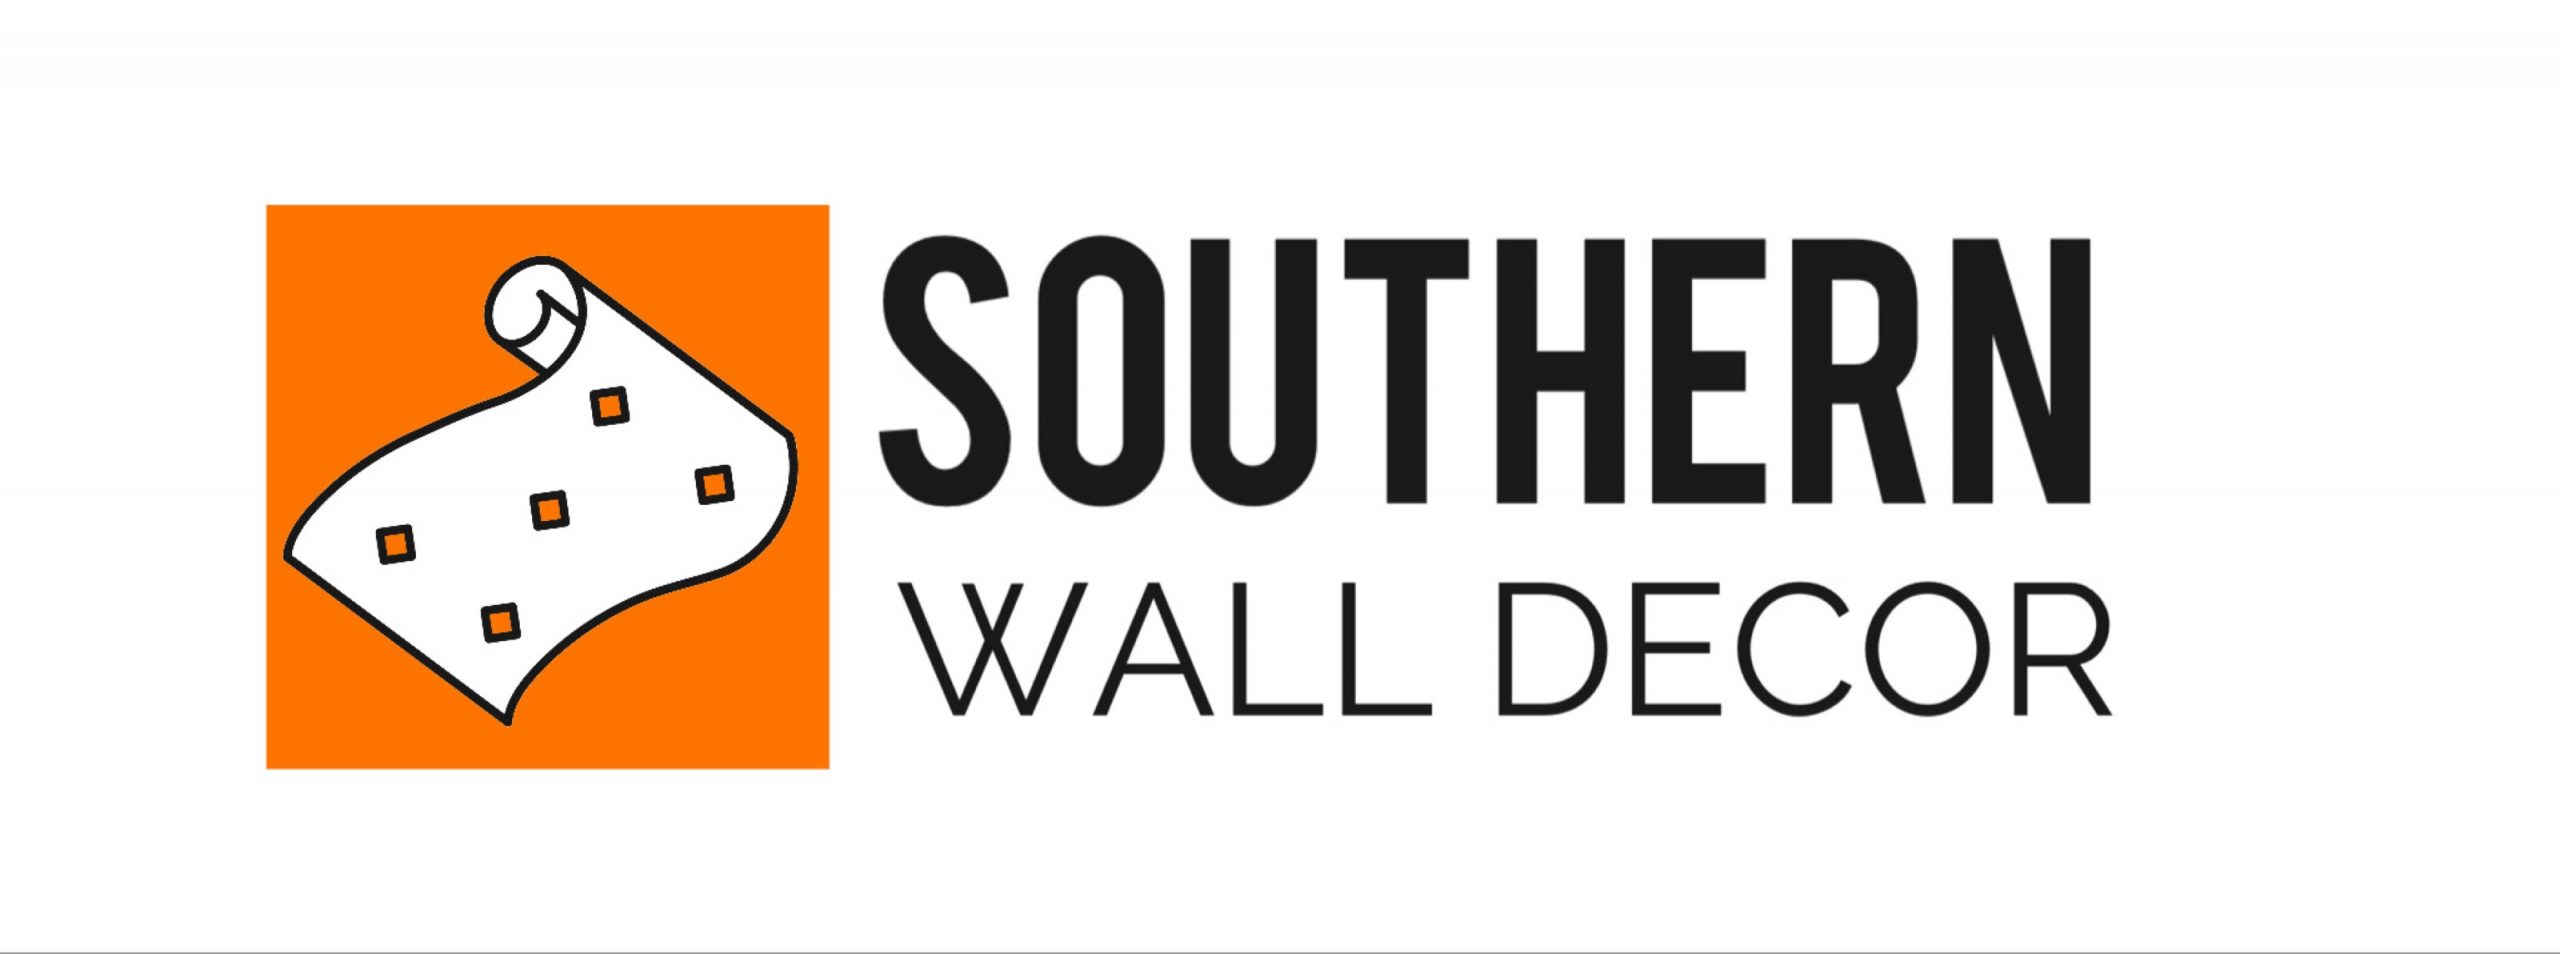 Southern Wall Decor